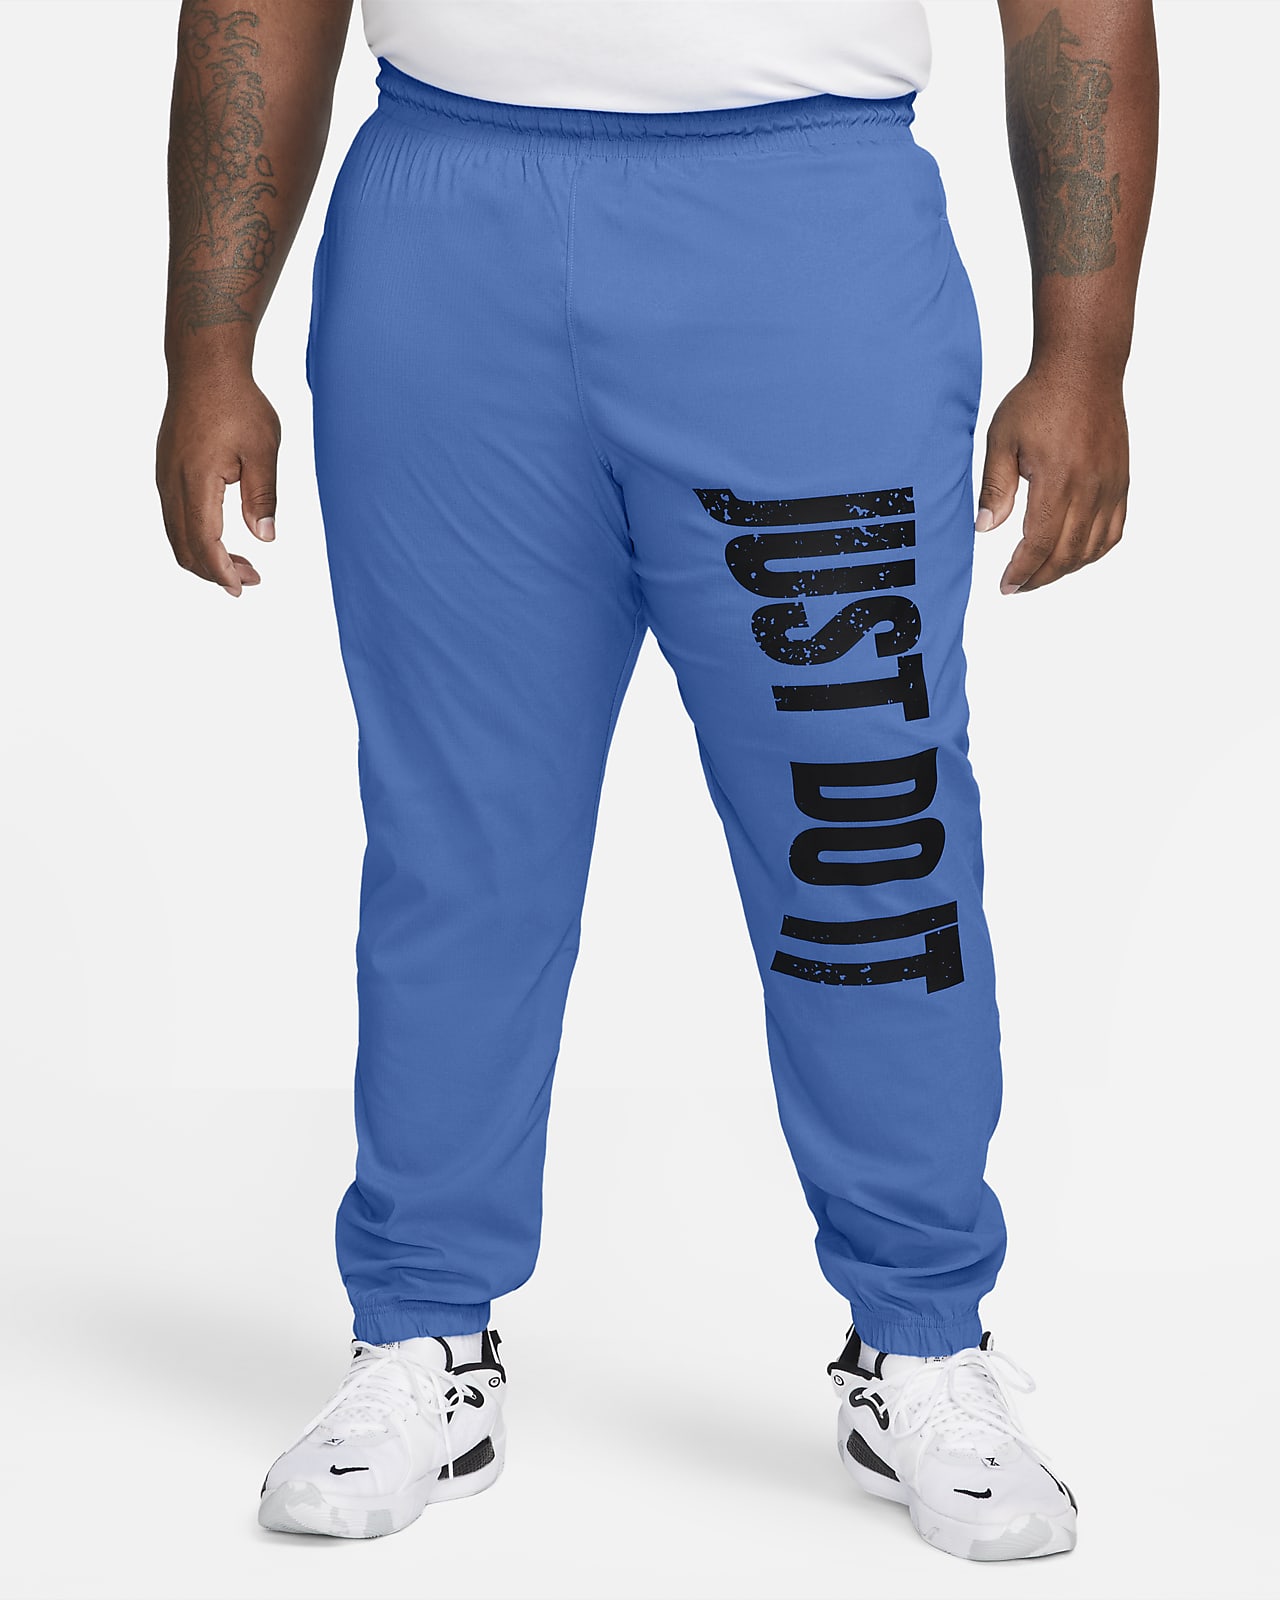 Pants de de tejido Woven para hombre Nike Nike.com